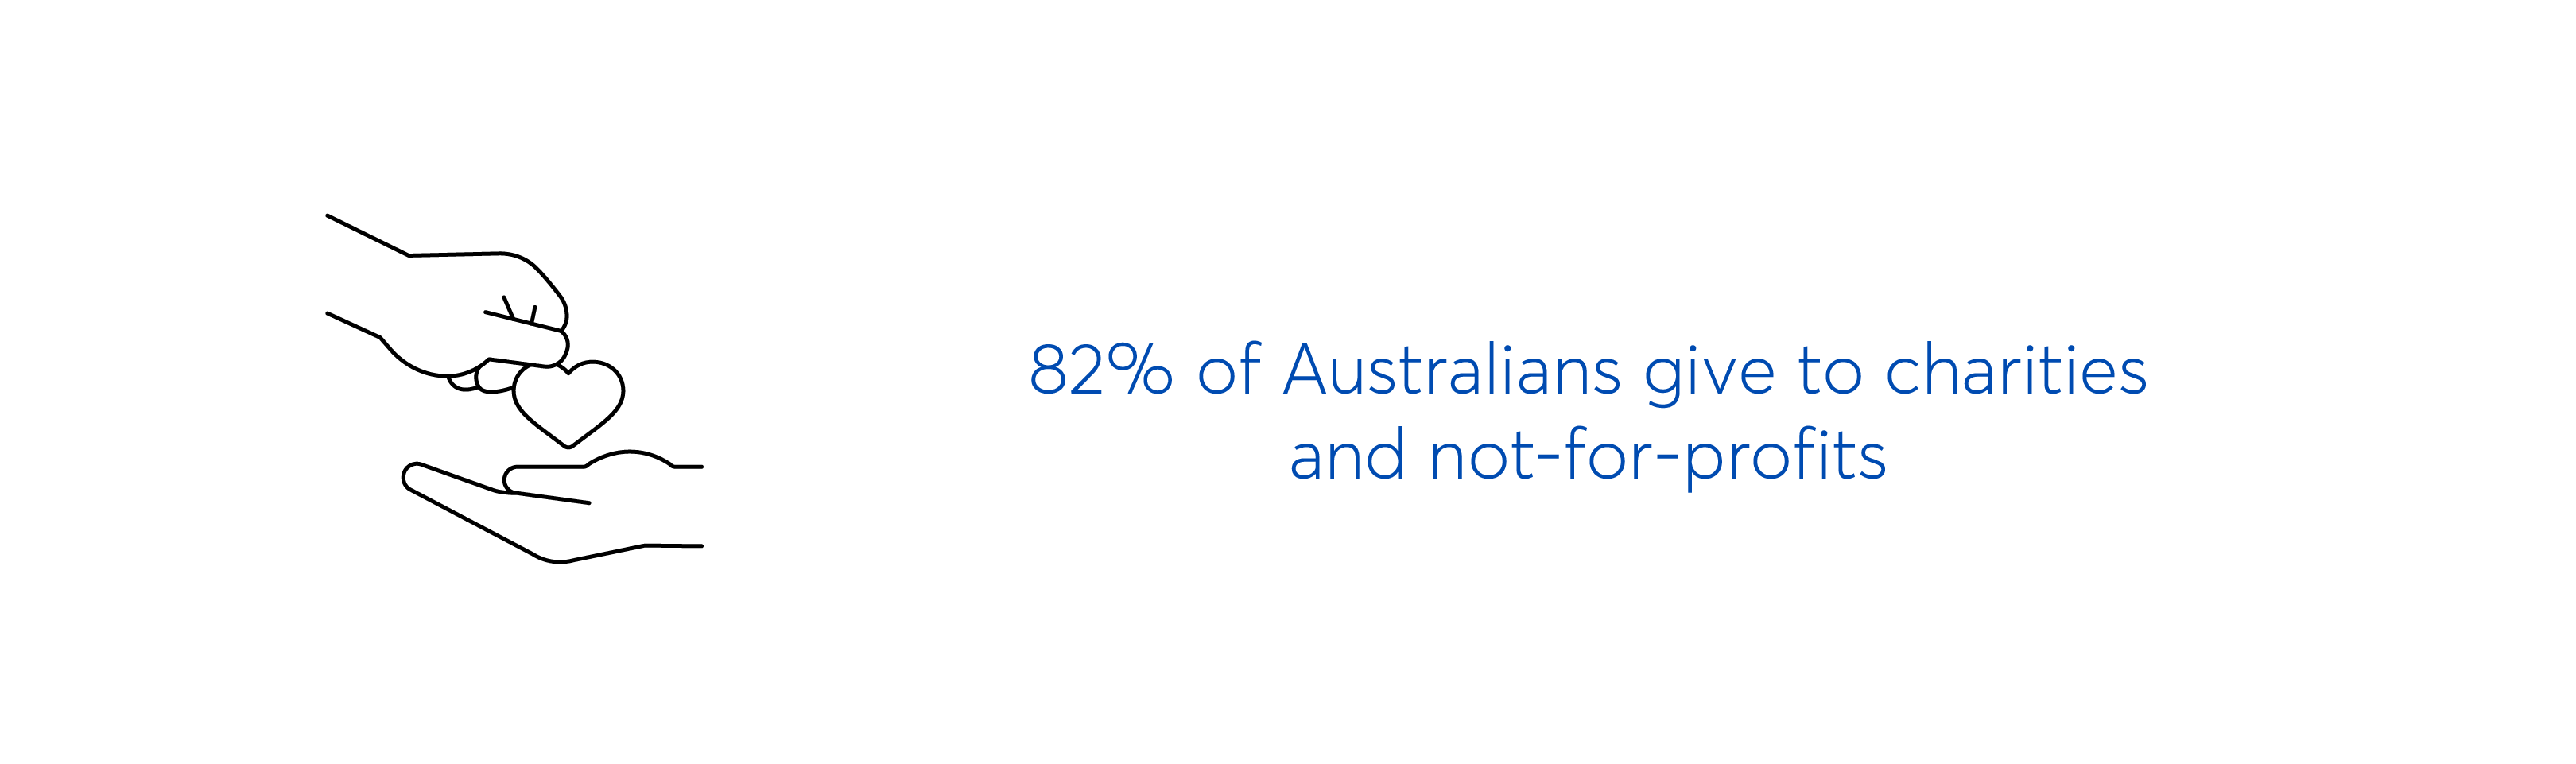 82% of Australians give